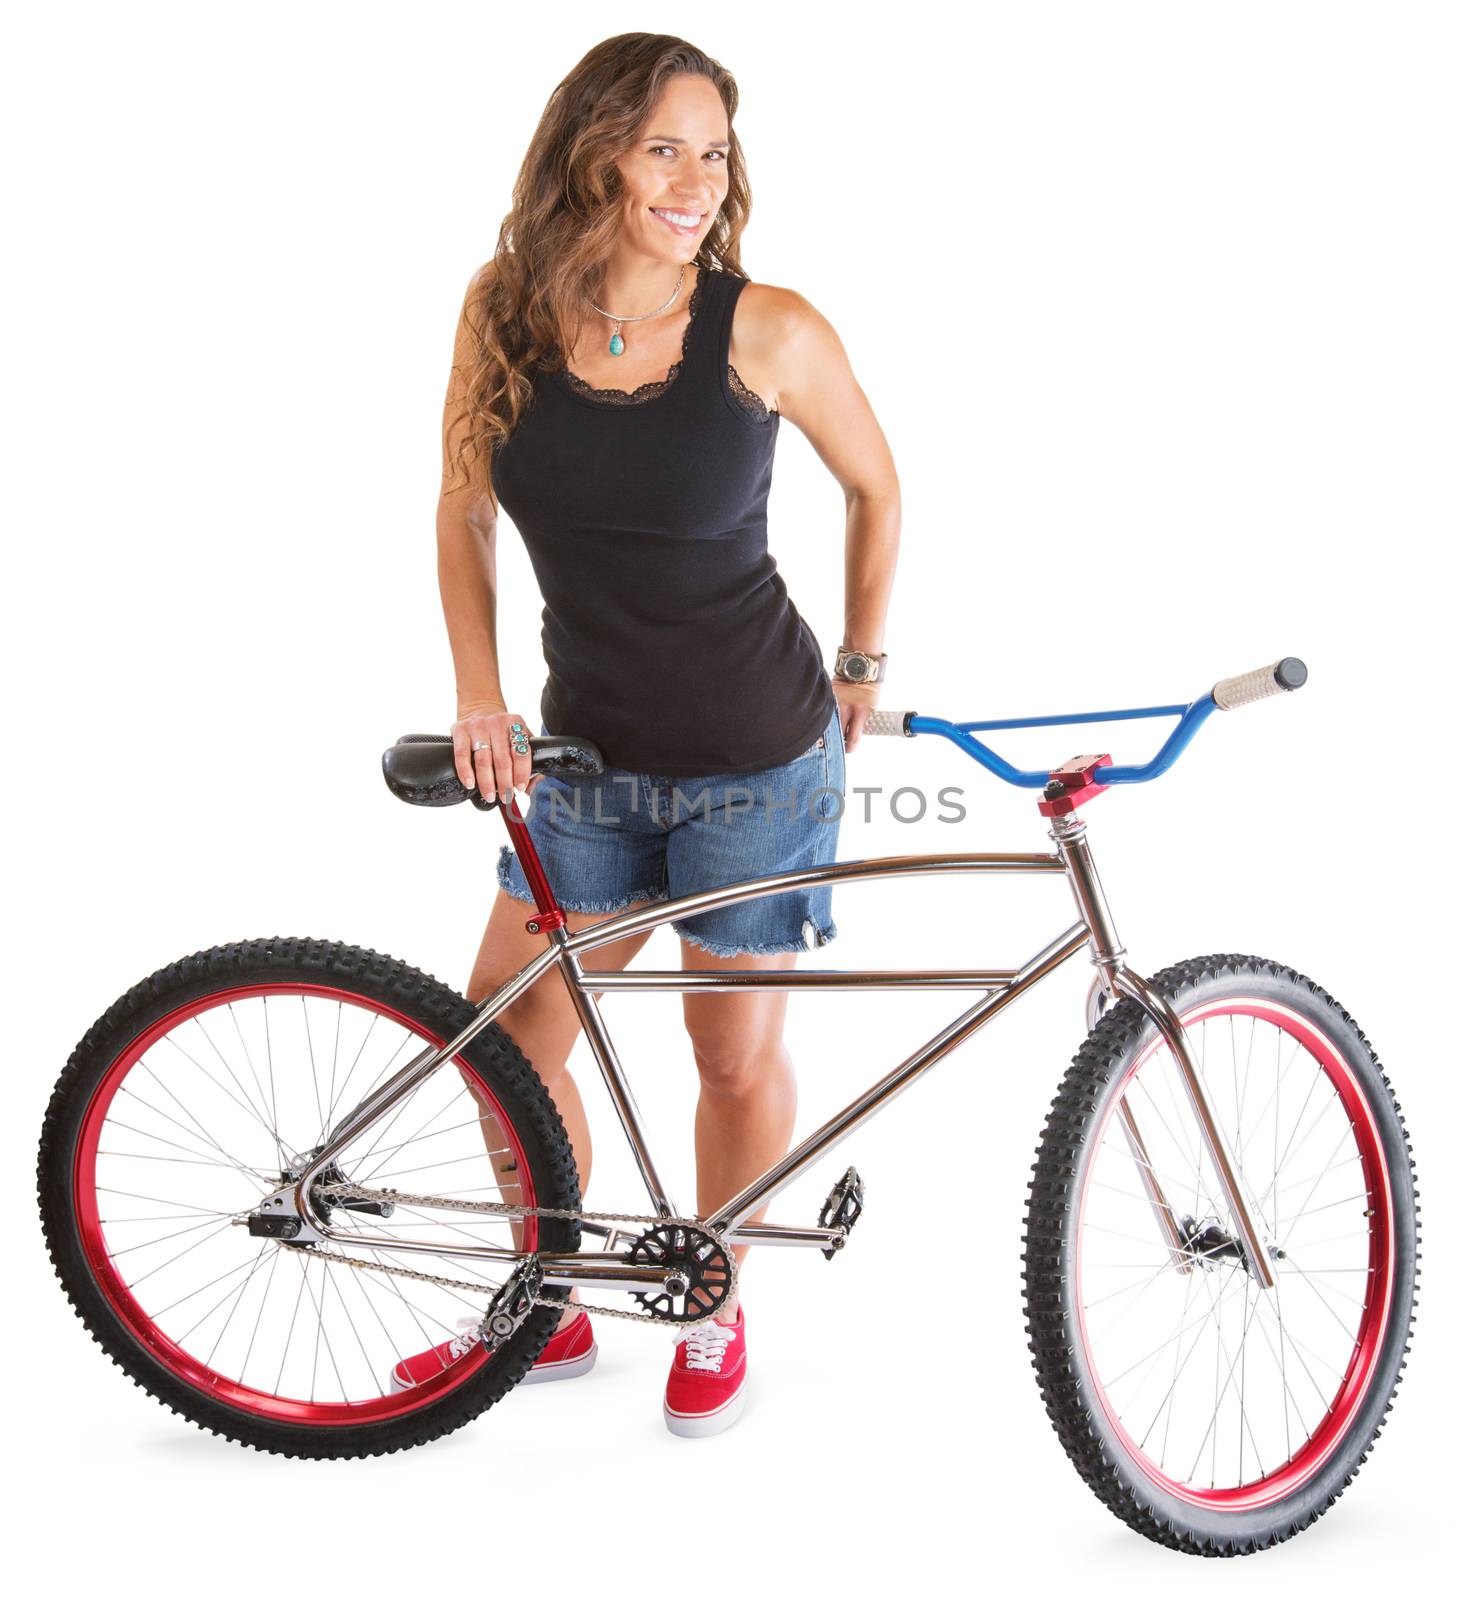 Cute adult female in shorts with bike